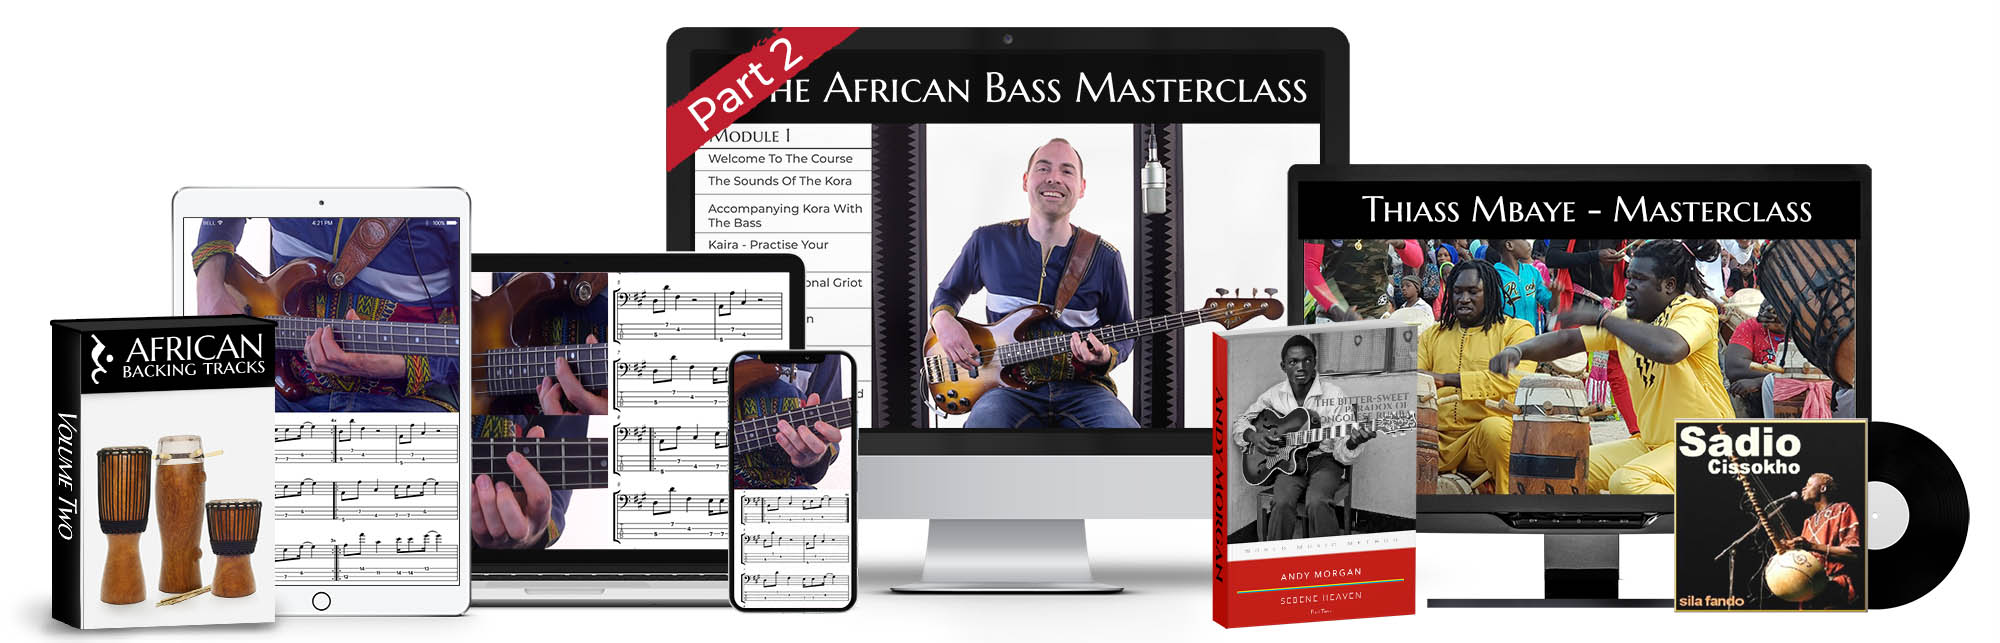 Congolese Guitar Evolution – Online Course